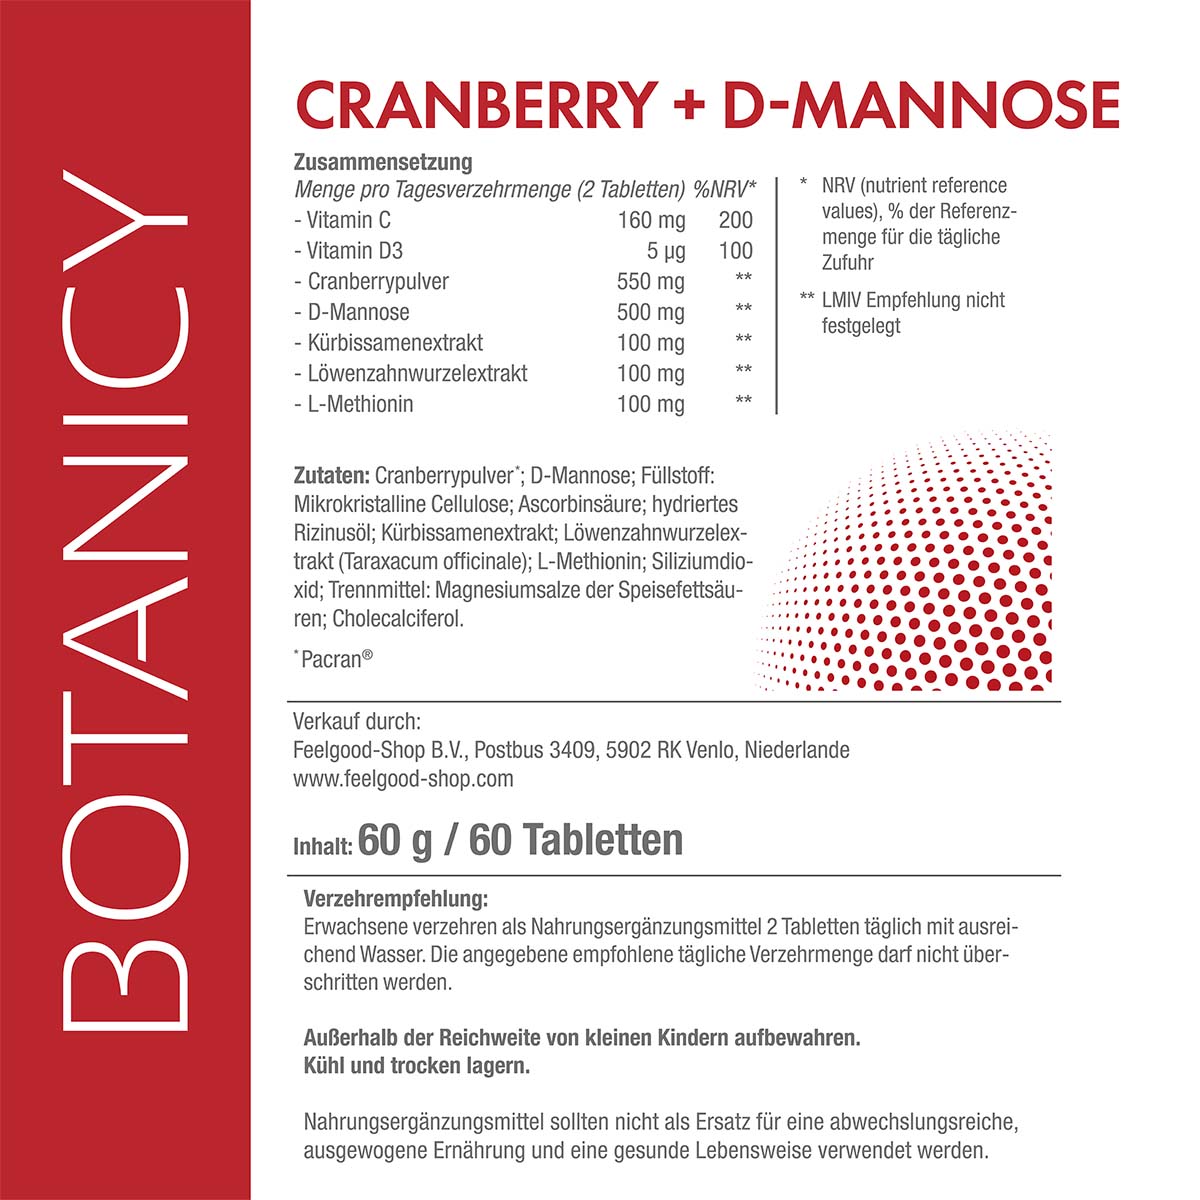 CRANBERRY + D-MANNOSE